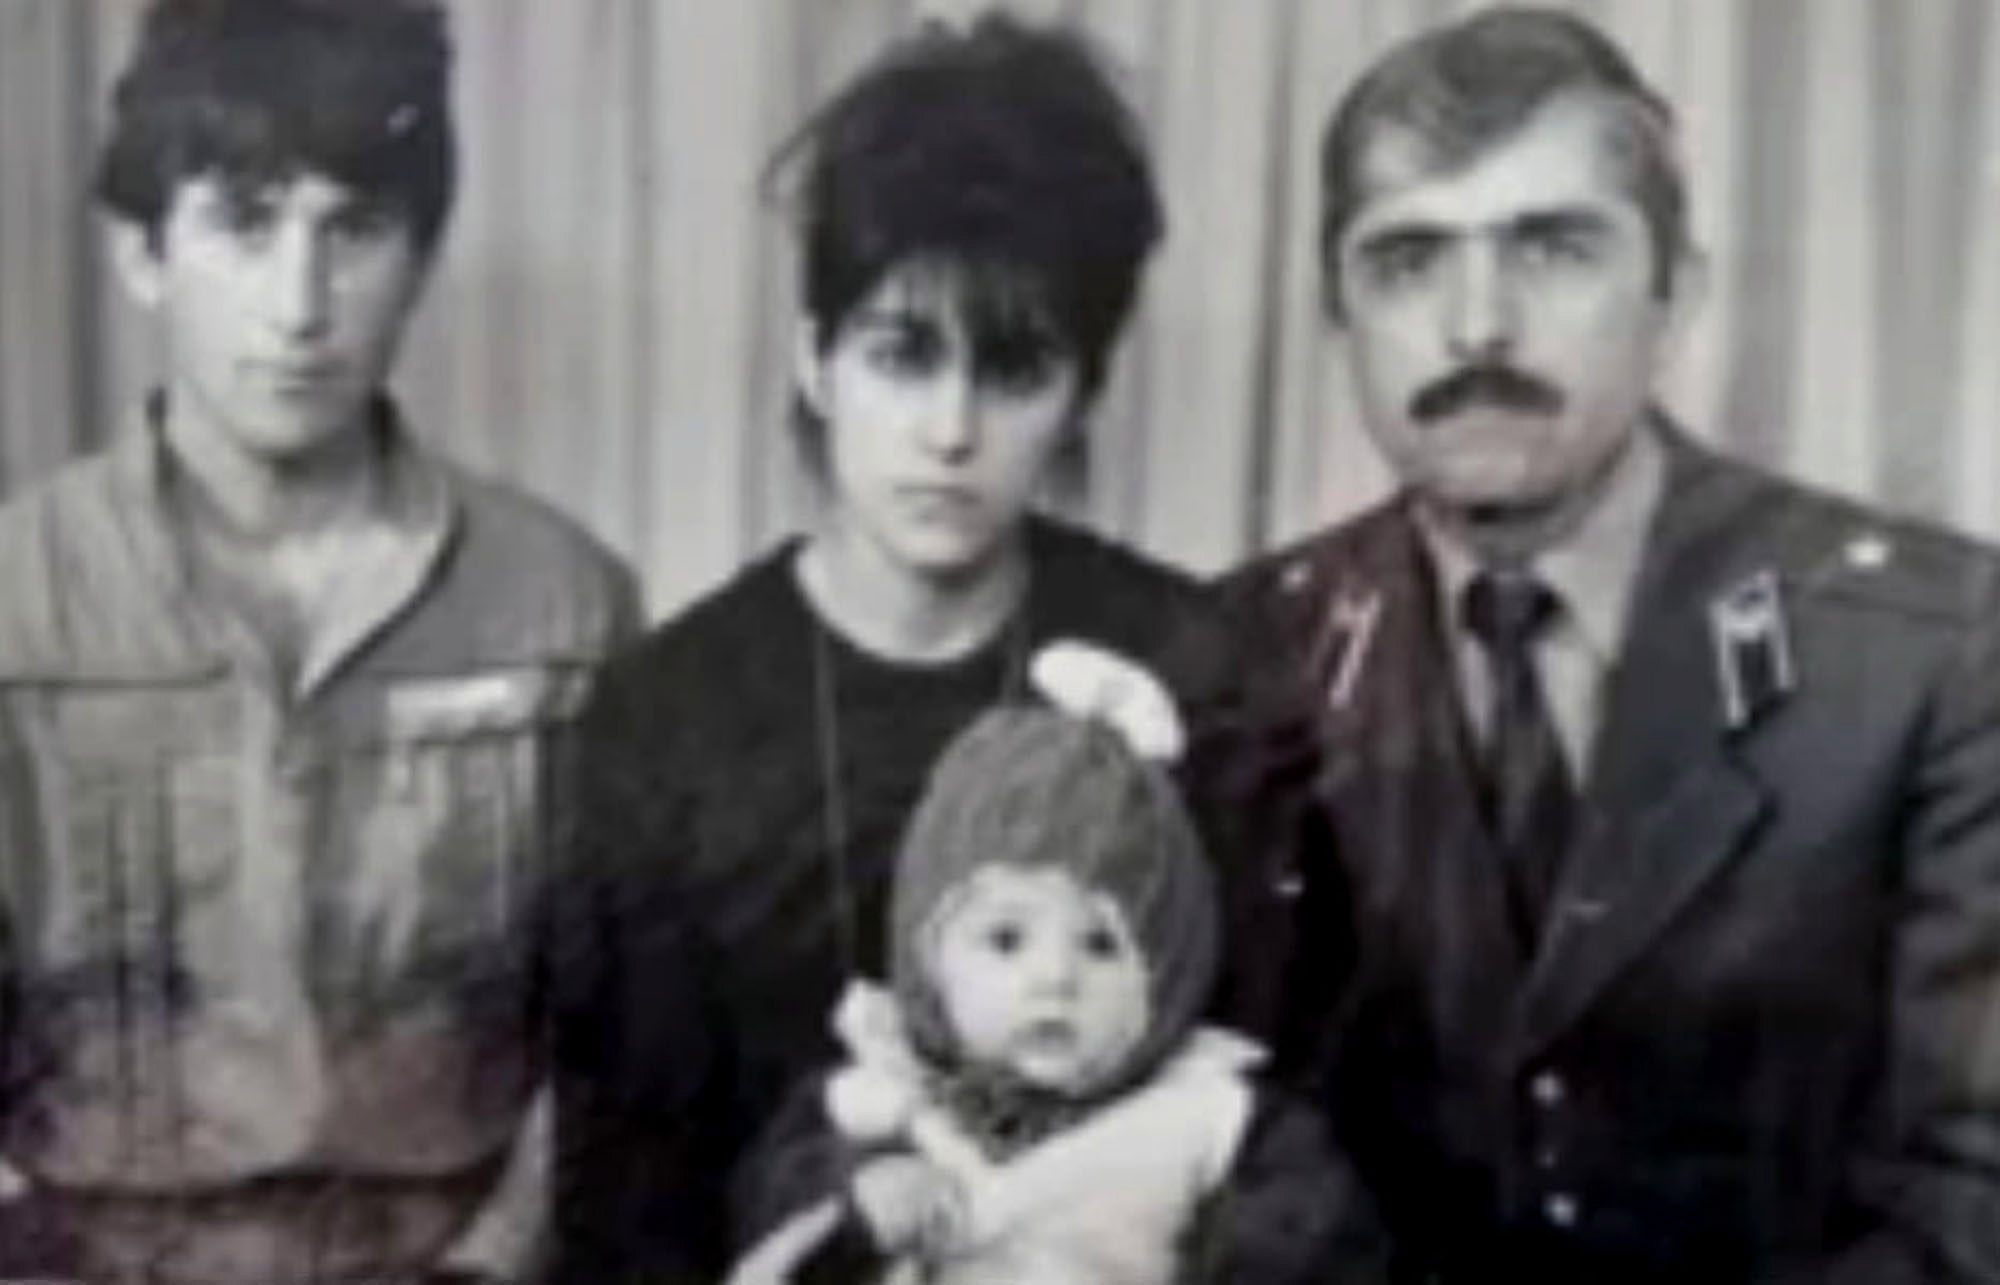 An undated family photo provided by Patimat Suleimanova, the aunt of USA Boston bomb suspects, shows Anzor Tsarnaev, left, Zubeidat Tsarnaev holding Tamerlan Tsarnaev and Anzor's brother Mukhammad Tsarnaev.